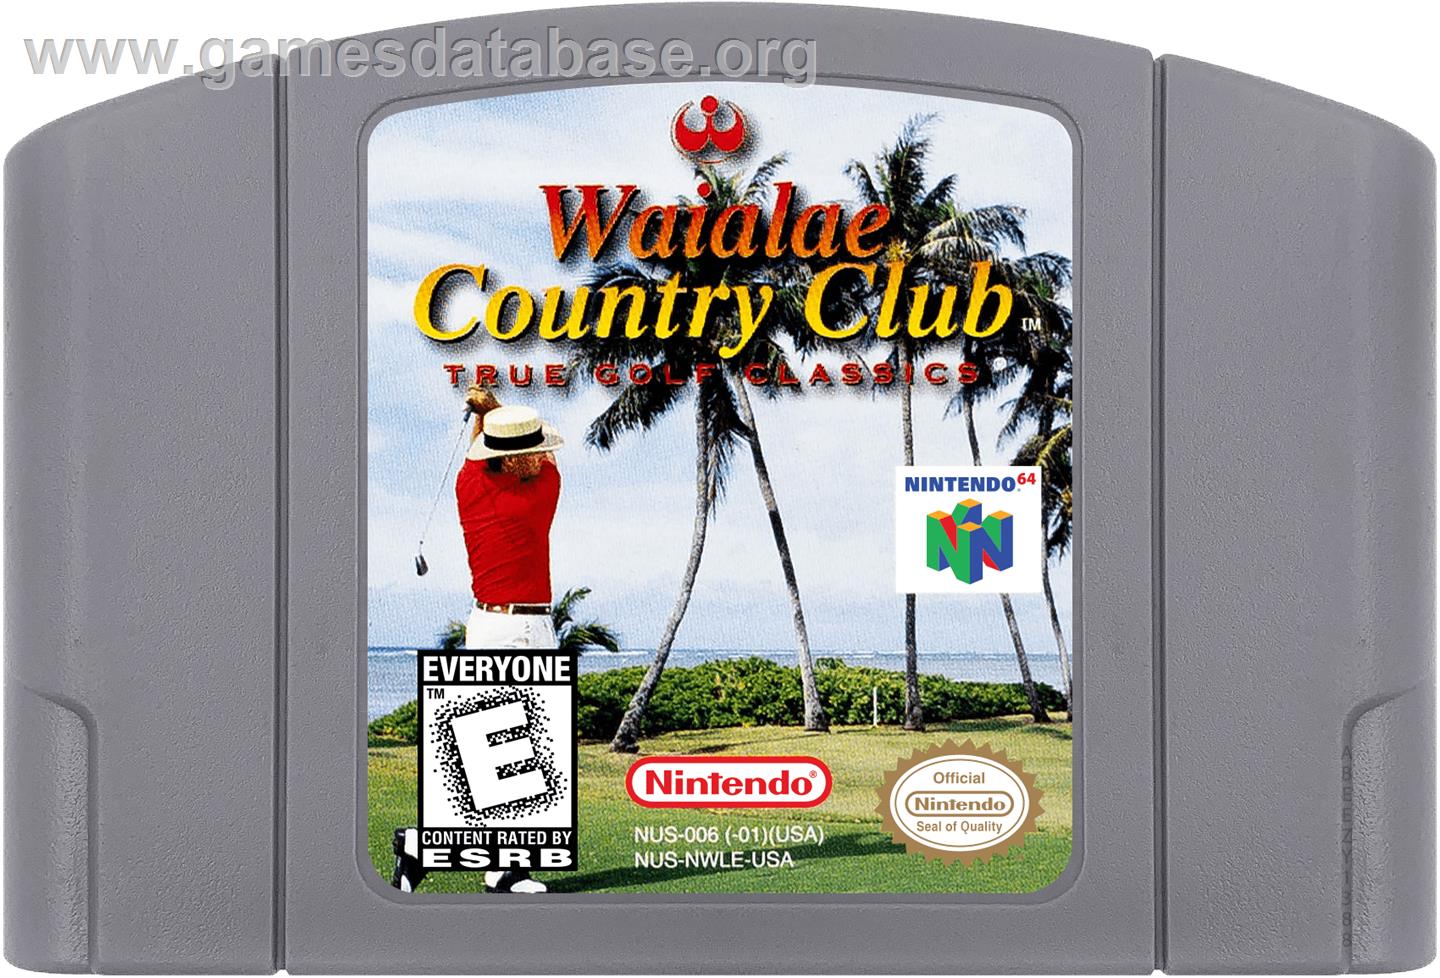 Waialae Country Club: True Golf Classics - Nintendo N64 - Artwork - Cartridge